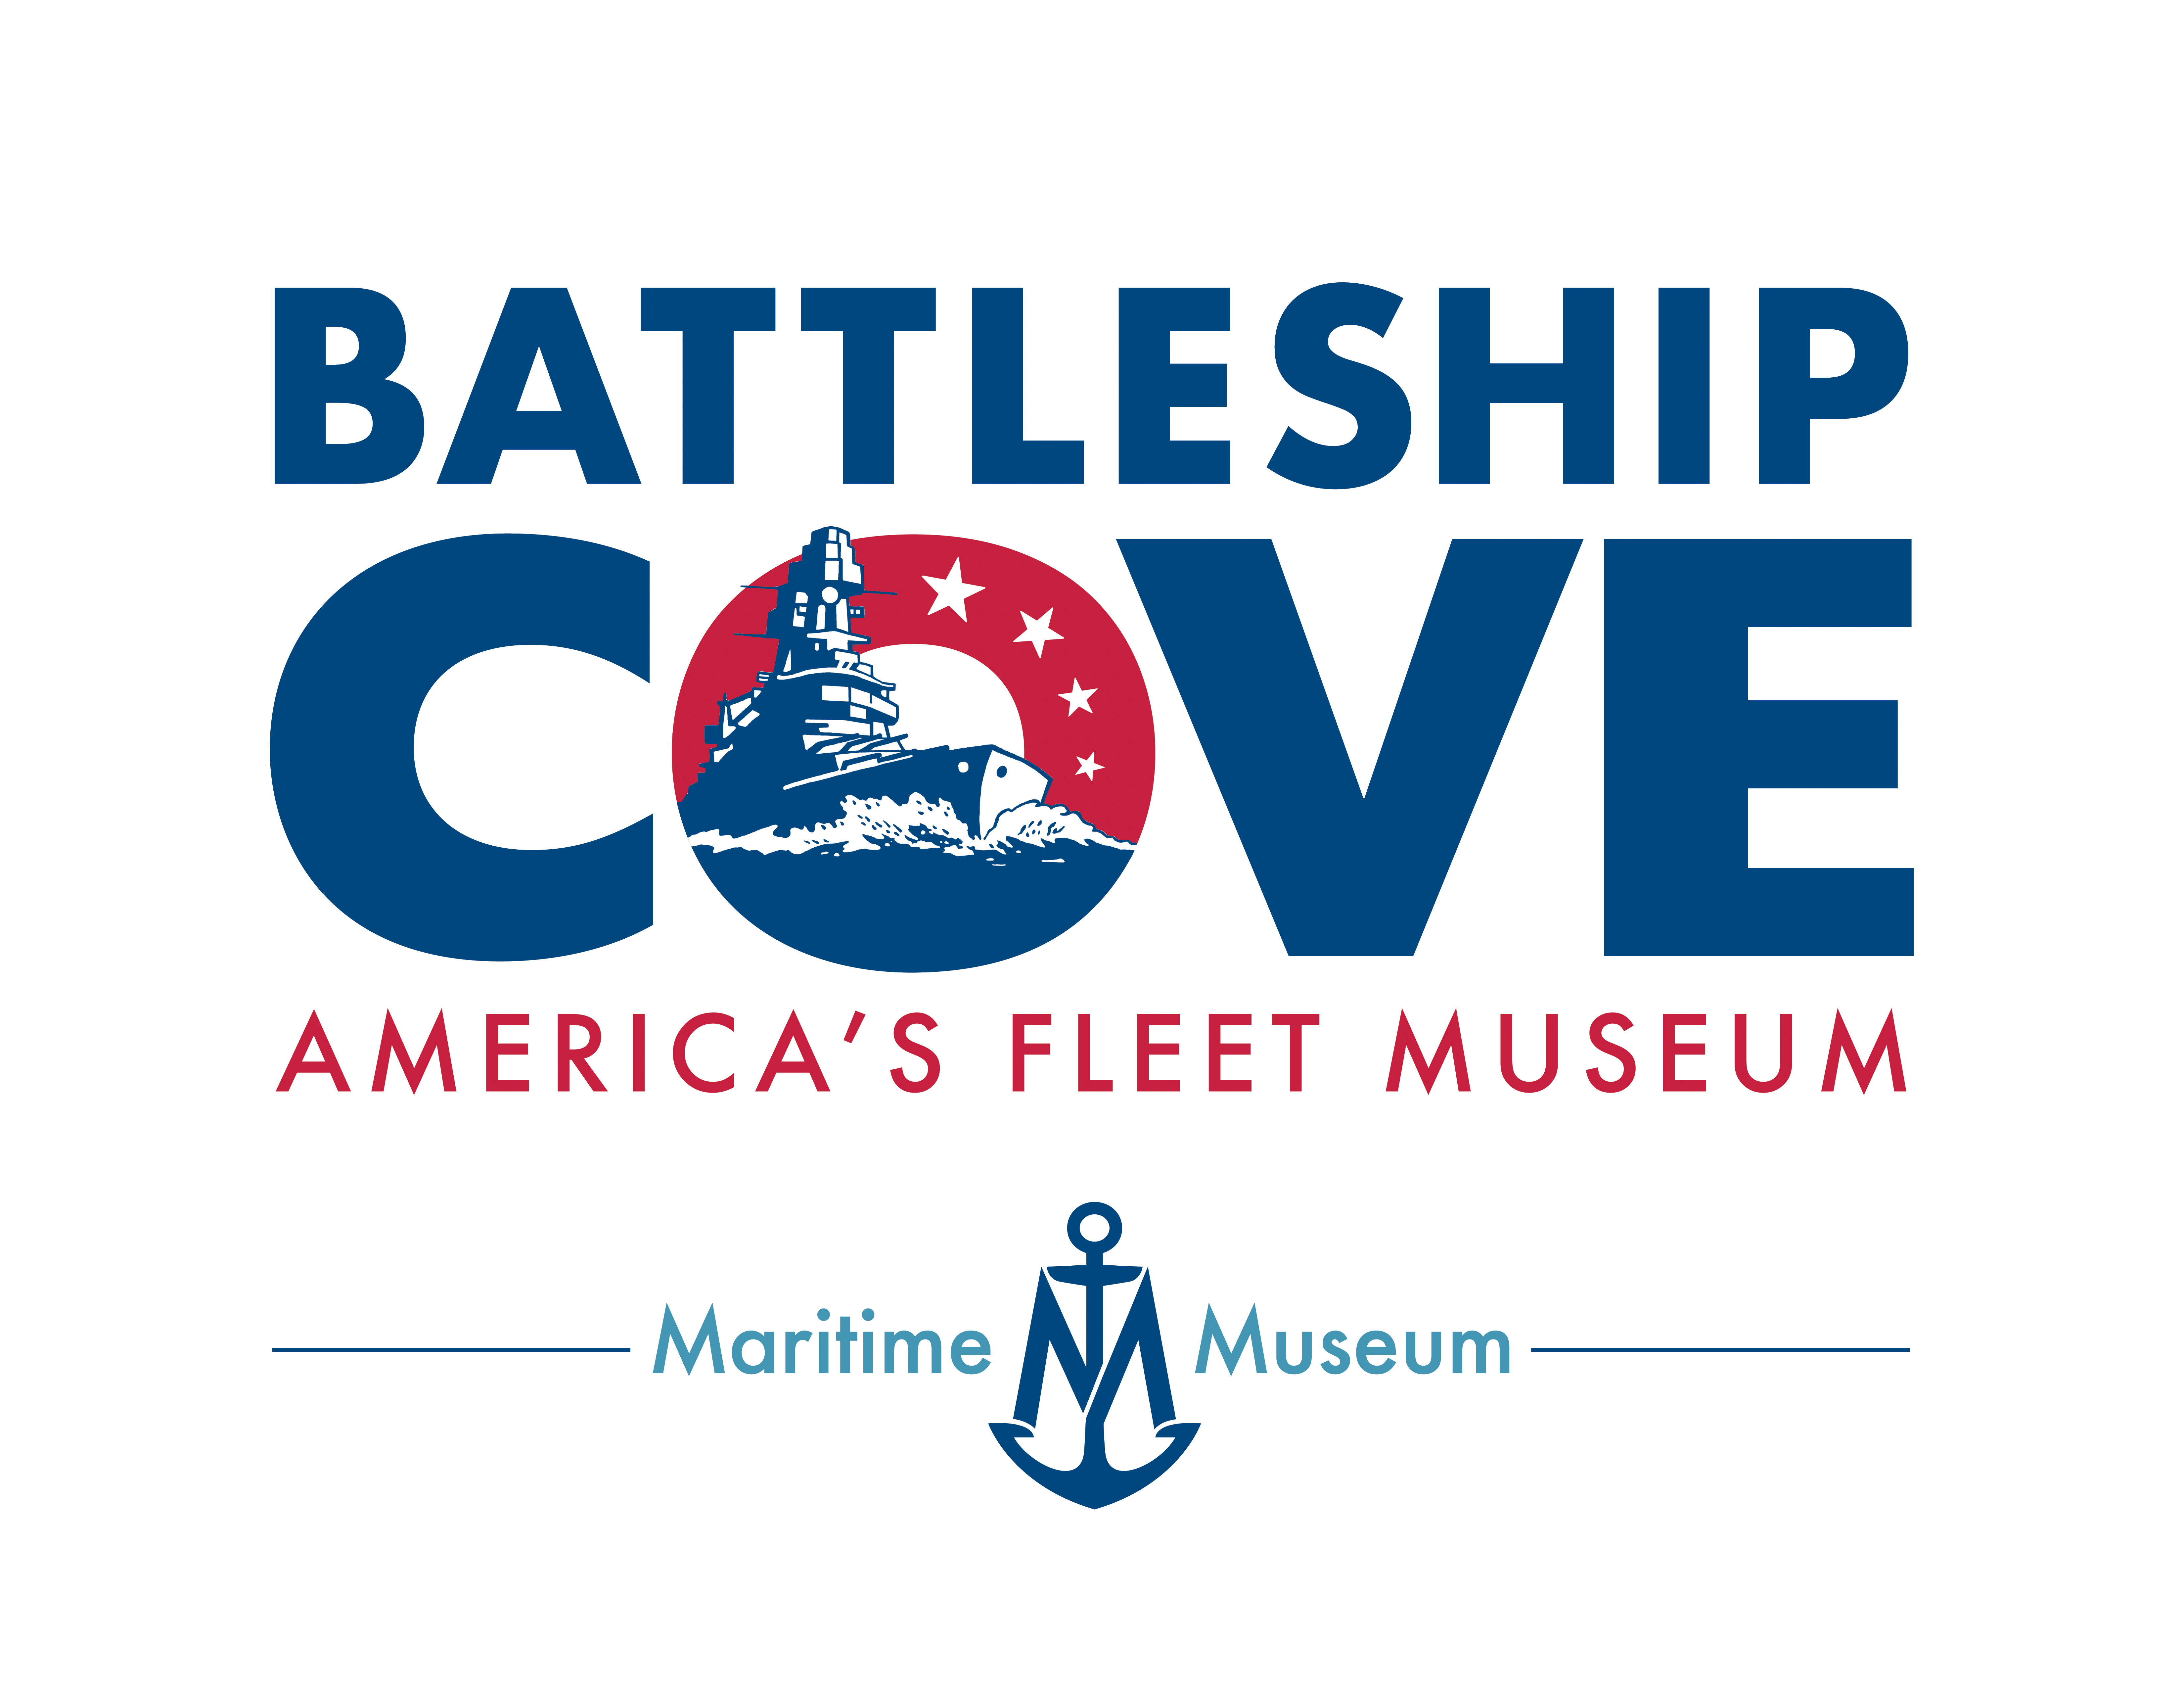 Battleship cove photo